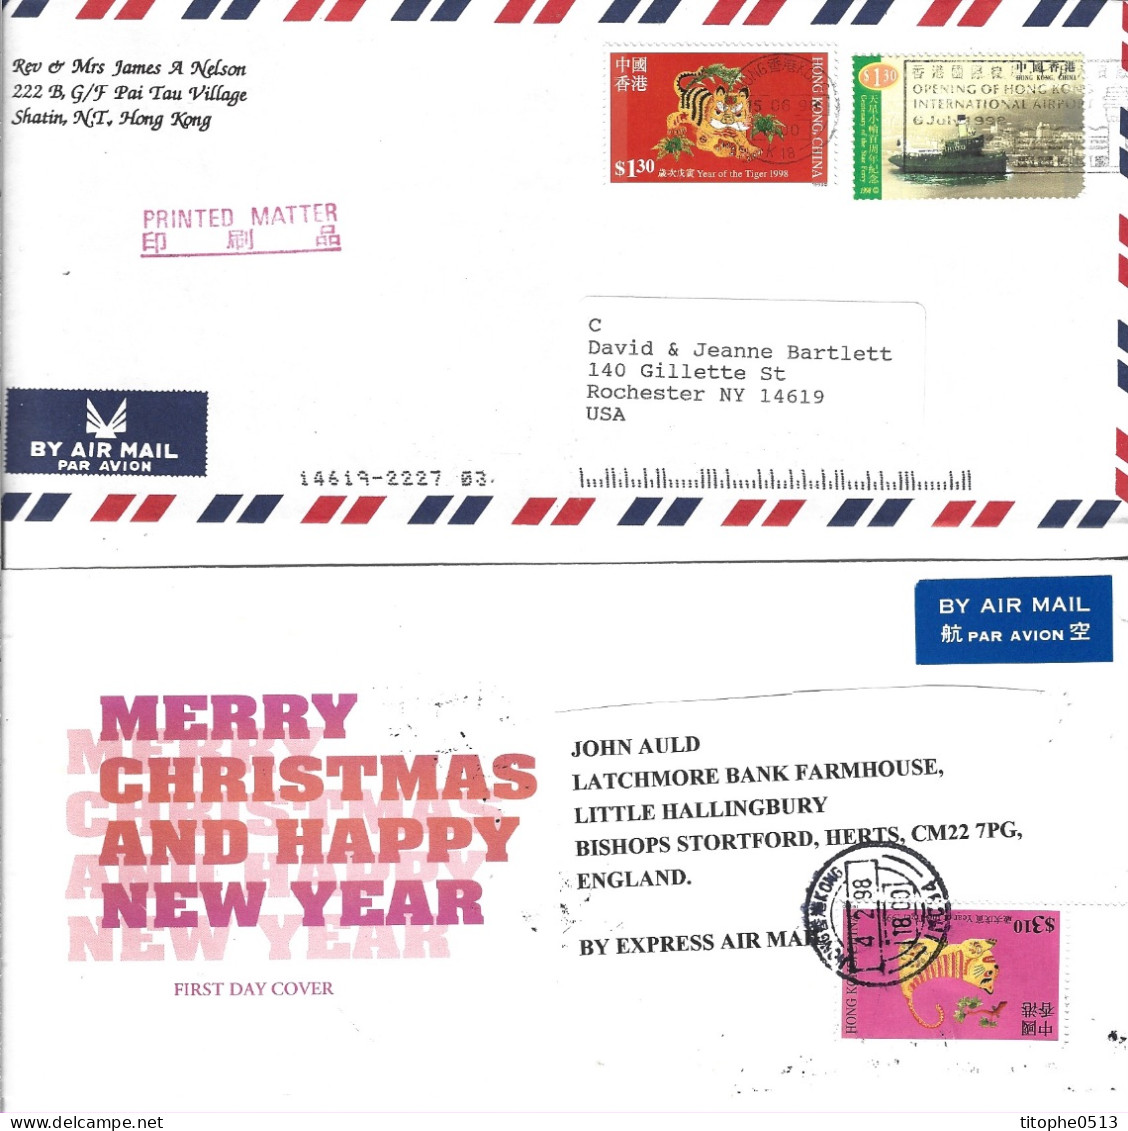 HONG KONG. 11 Enveloppes Ayant Circulé De 1977 à 2002. Nouvel An Chinois. - Chinees Nieuwjaar